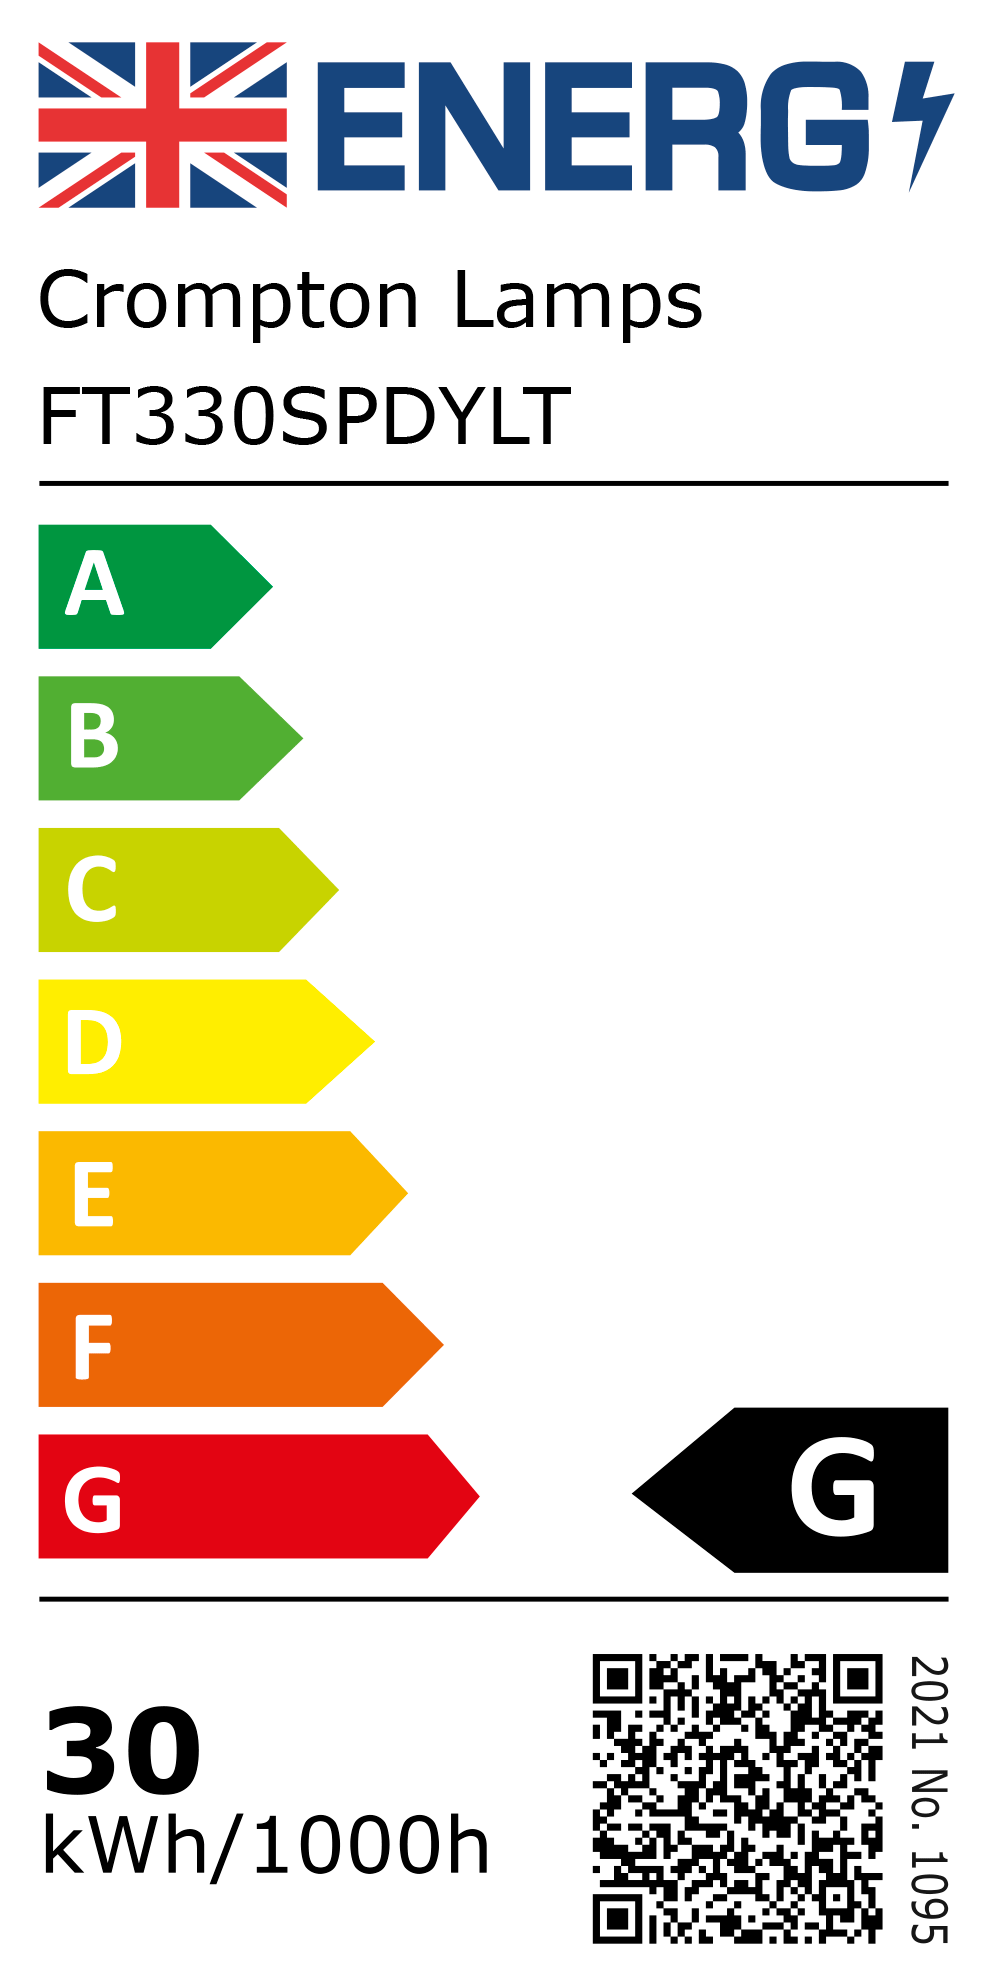 New 2021 Energy Rating Label: Stock Code FT330SPDYLT